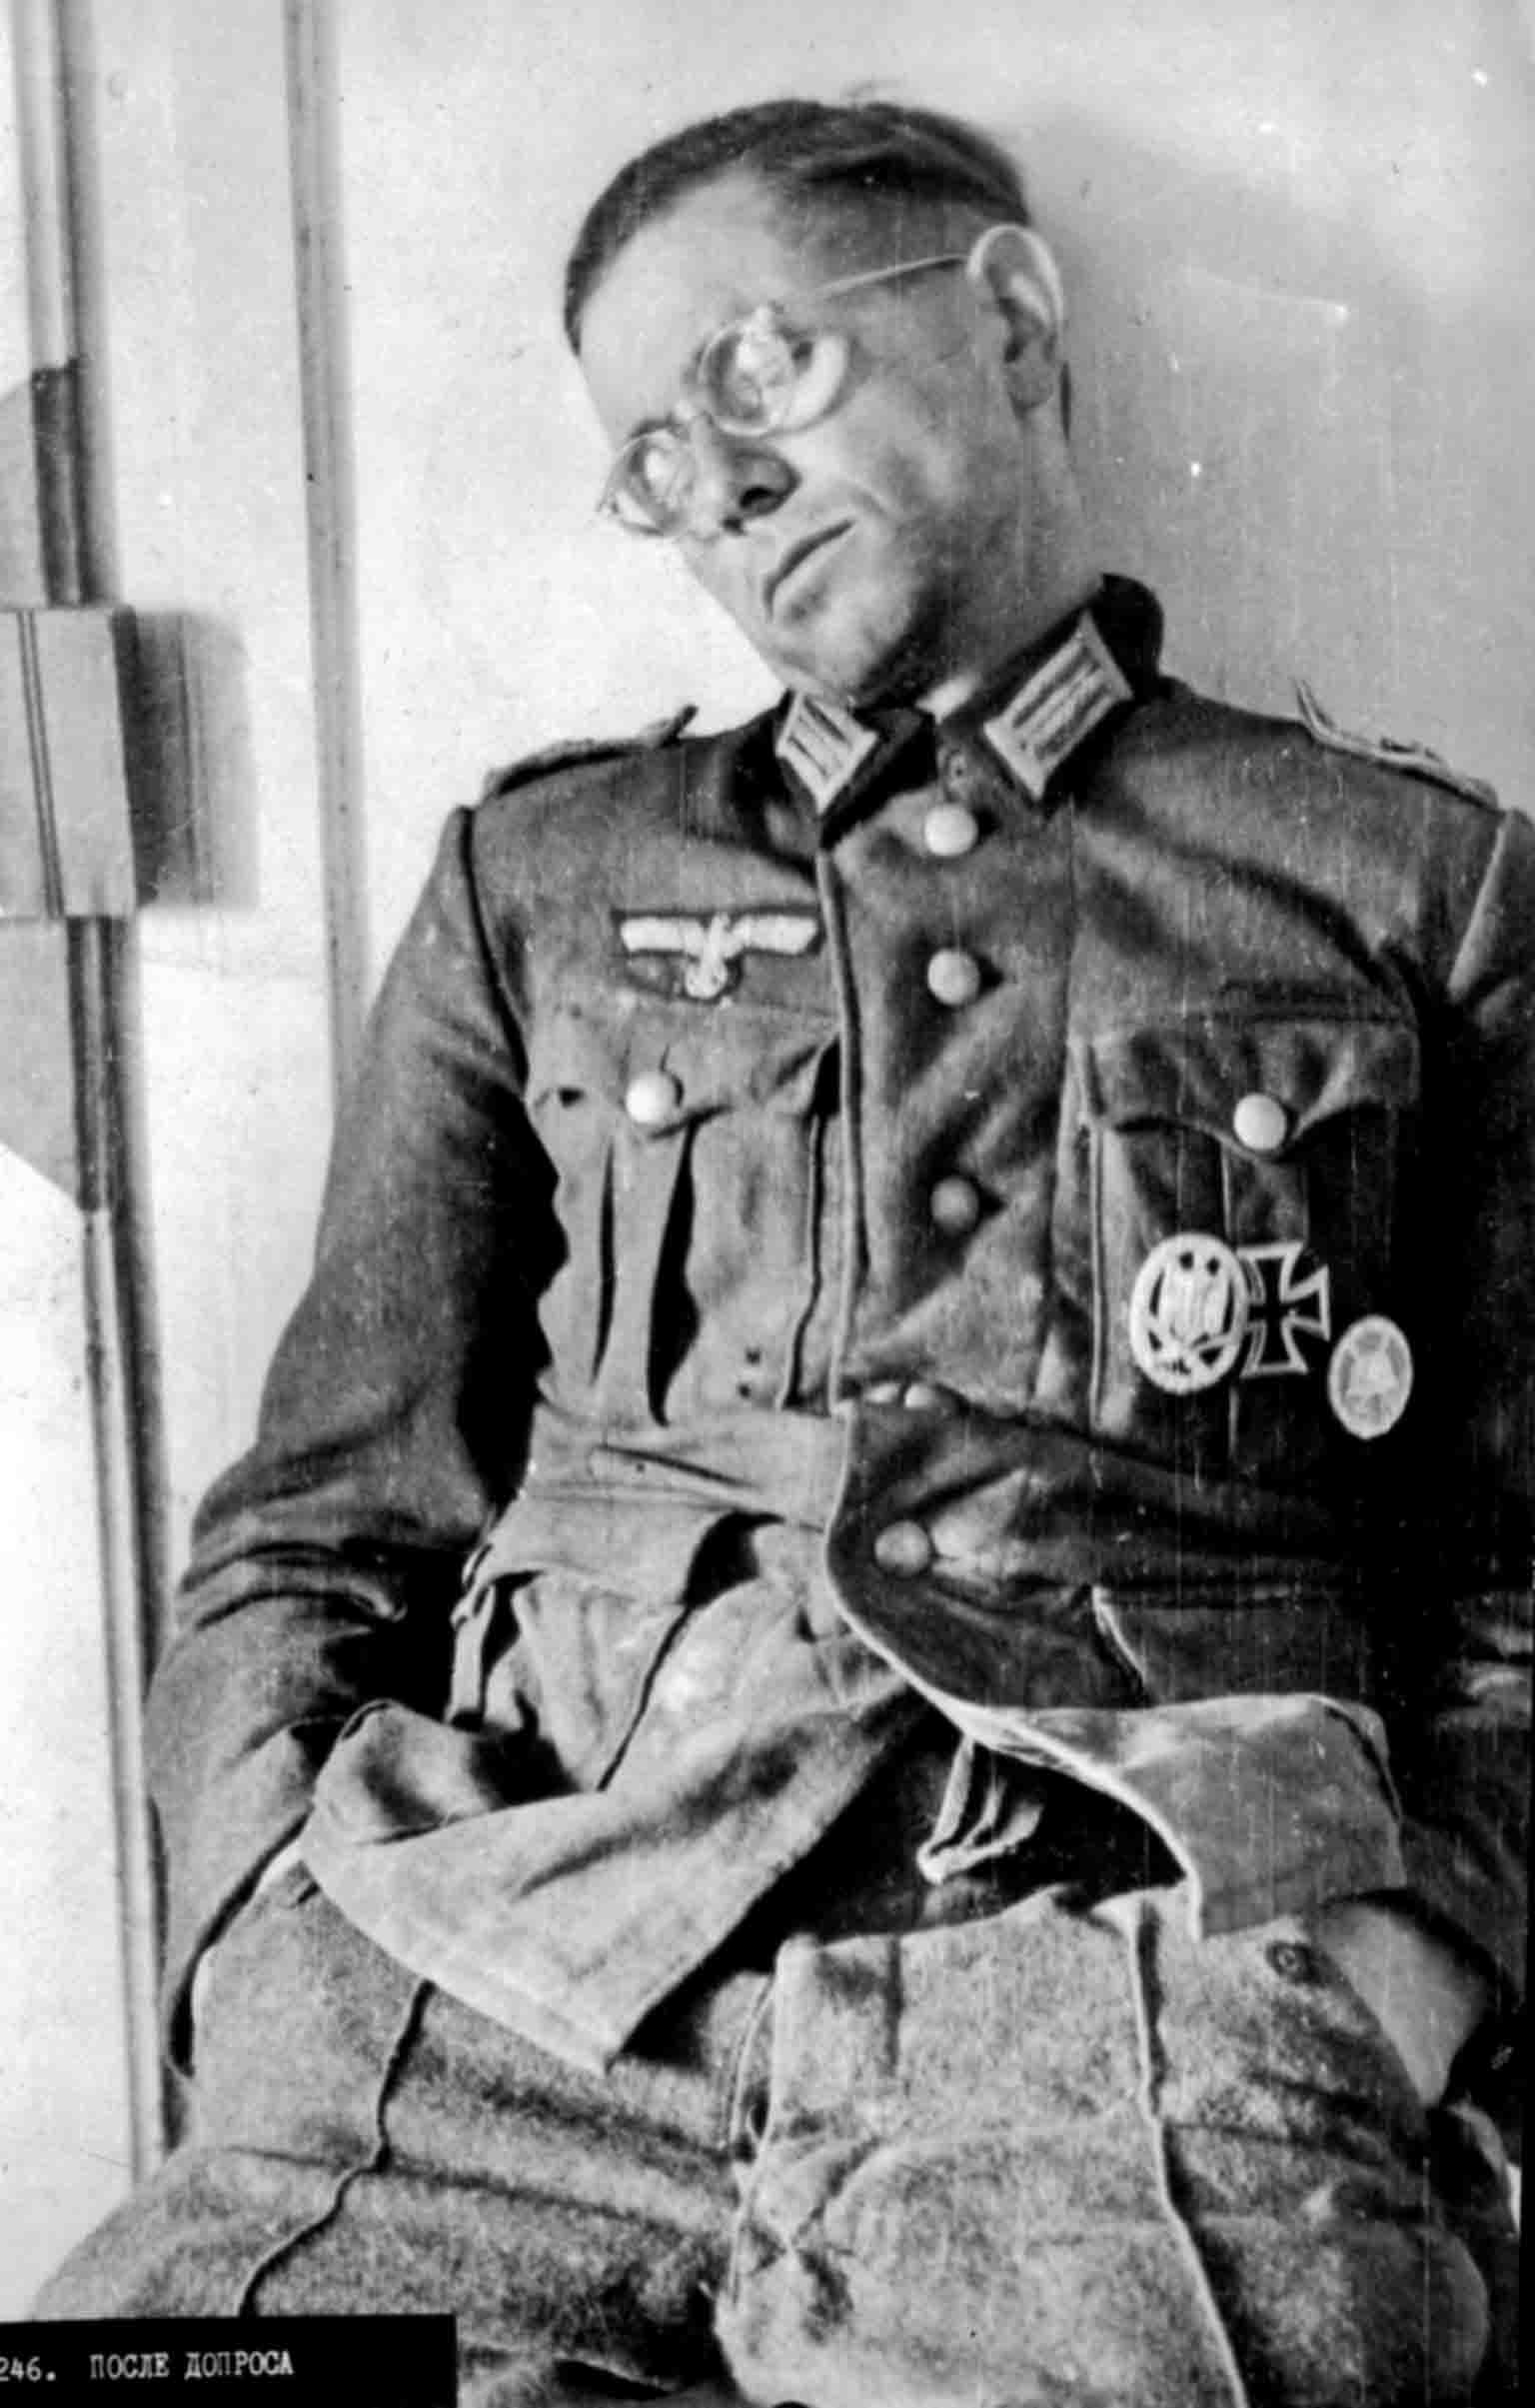 The captured German officer